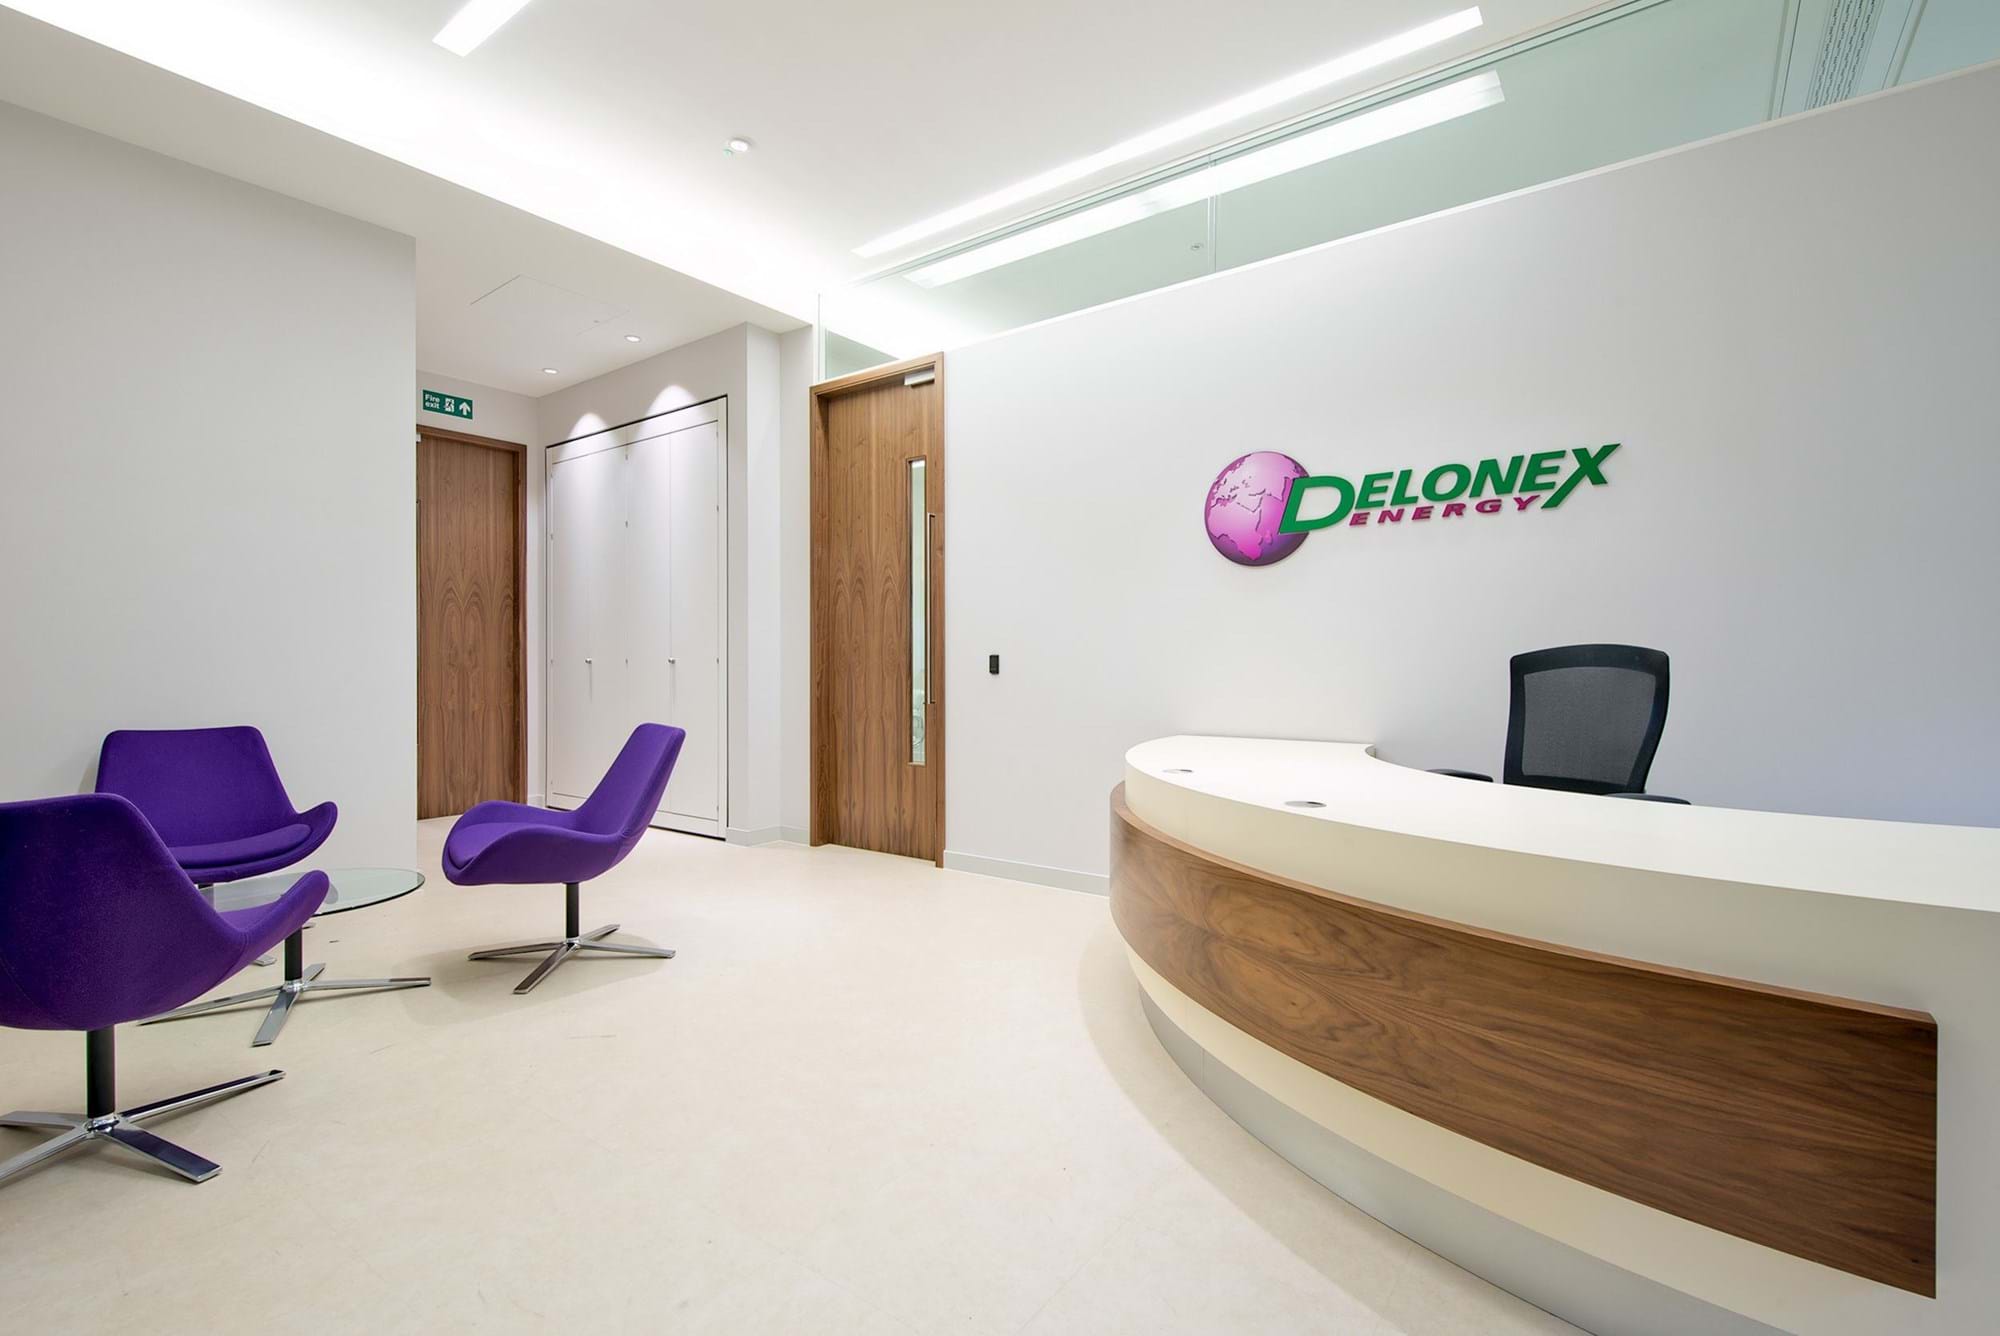 Modus Workspace office design, fit out and refurbishment - Delonex - Reception - Delonex 01 highres sRGB.jpg